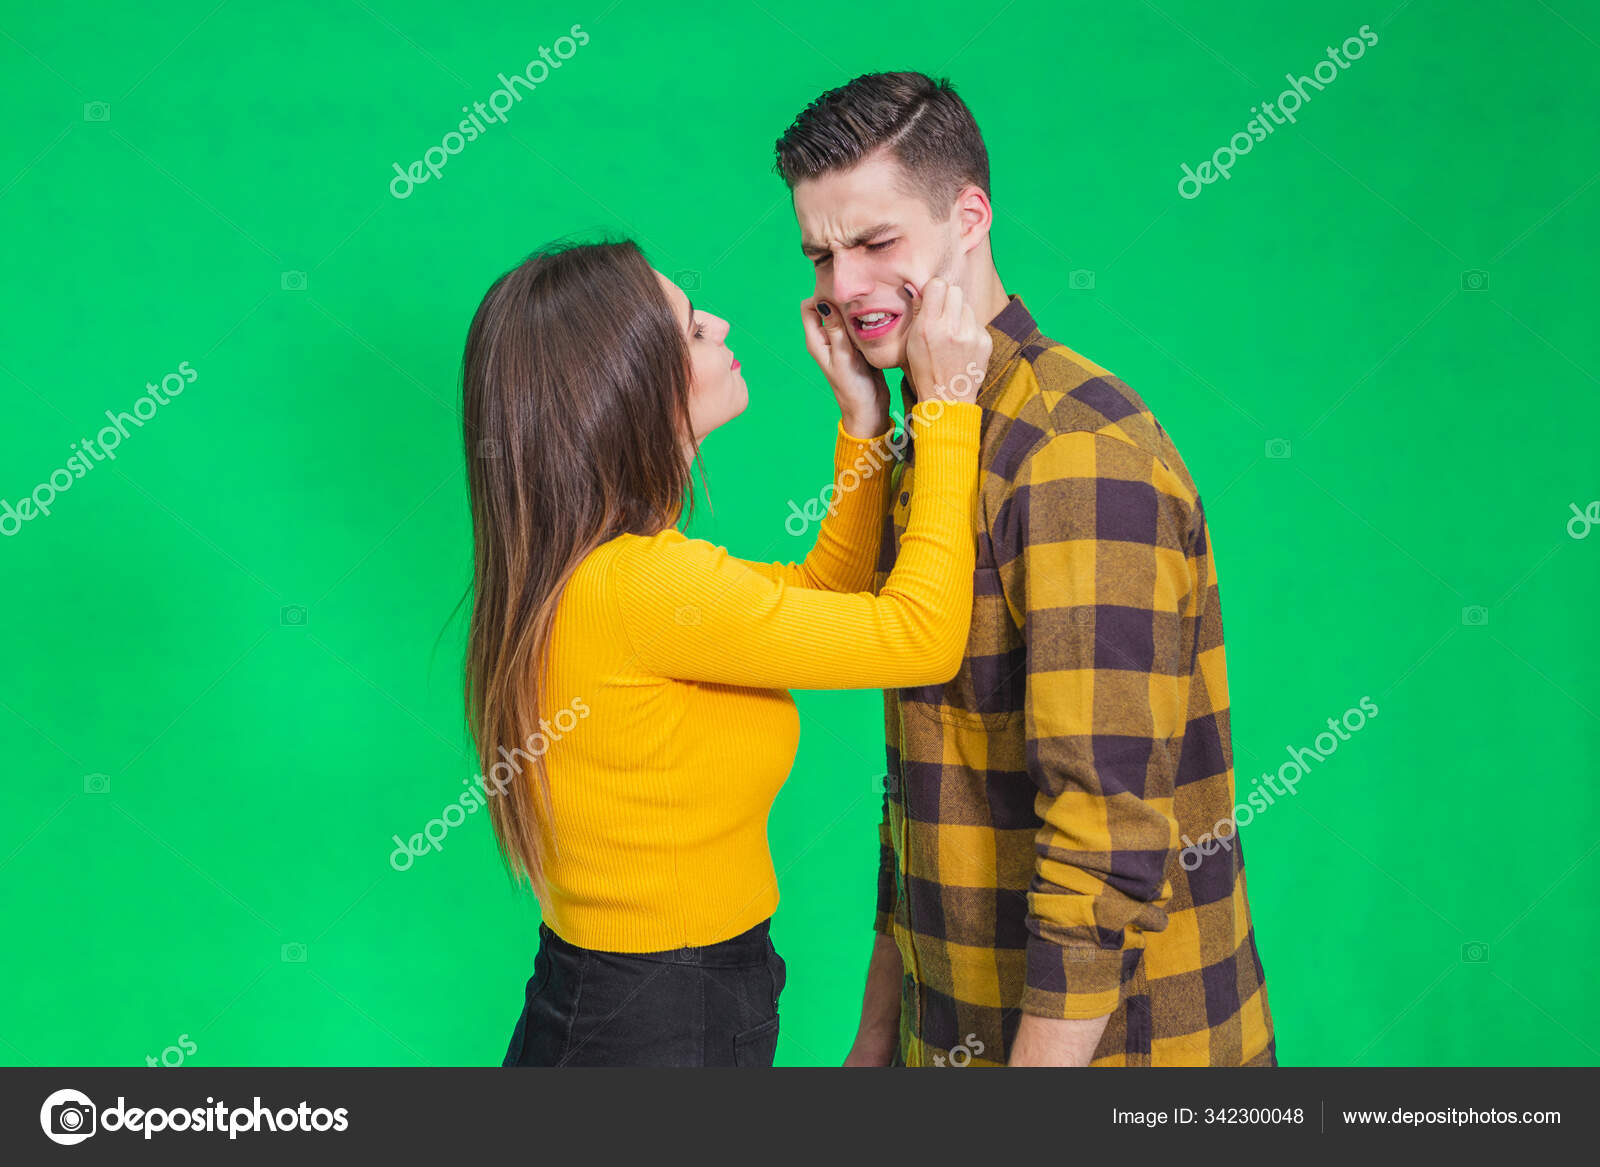 Girl Pinching Guys Cheeks Making Fyn He Is Scowling His Face Looking